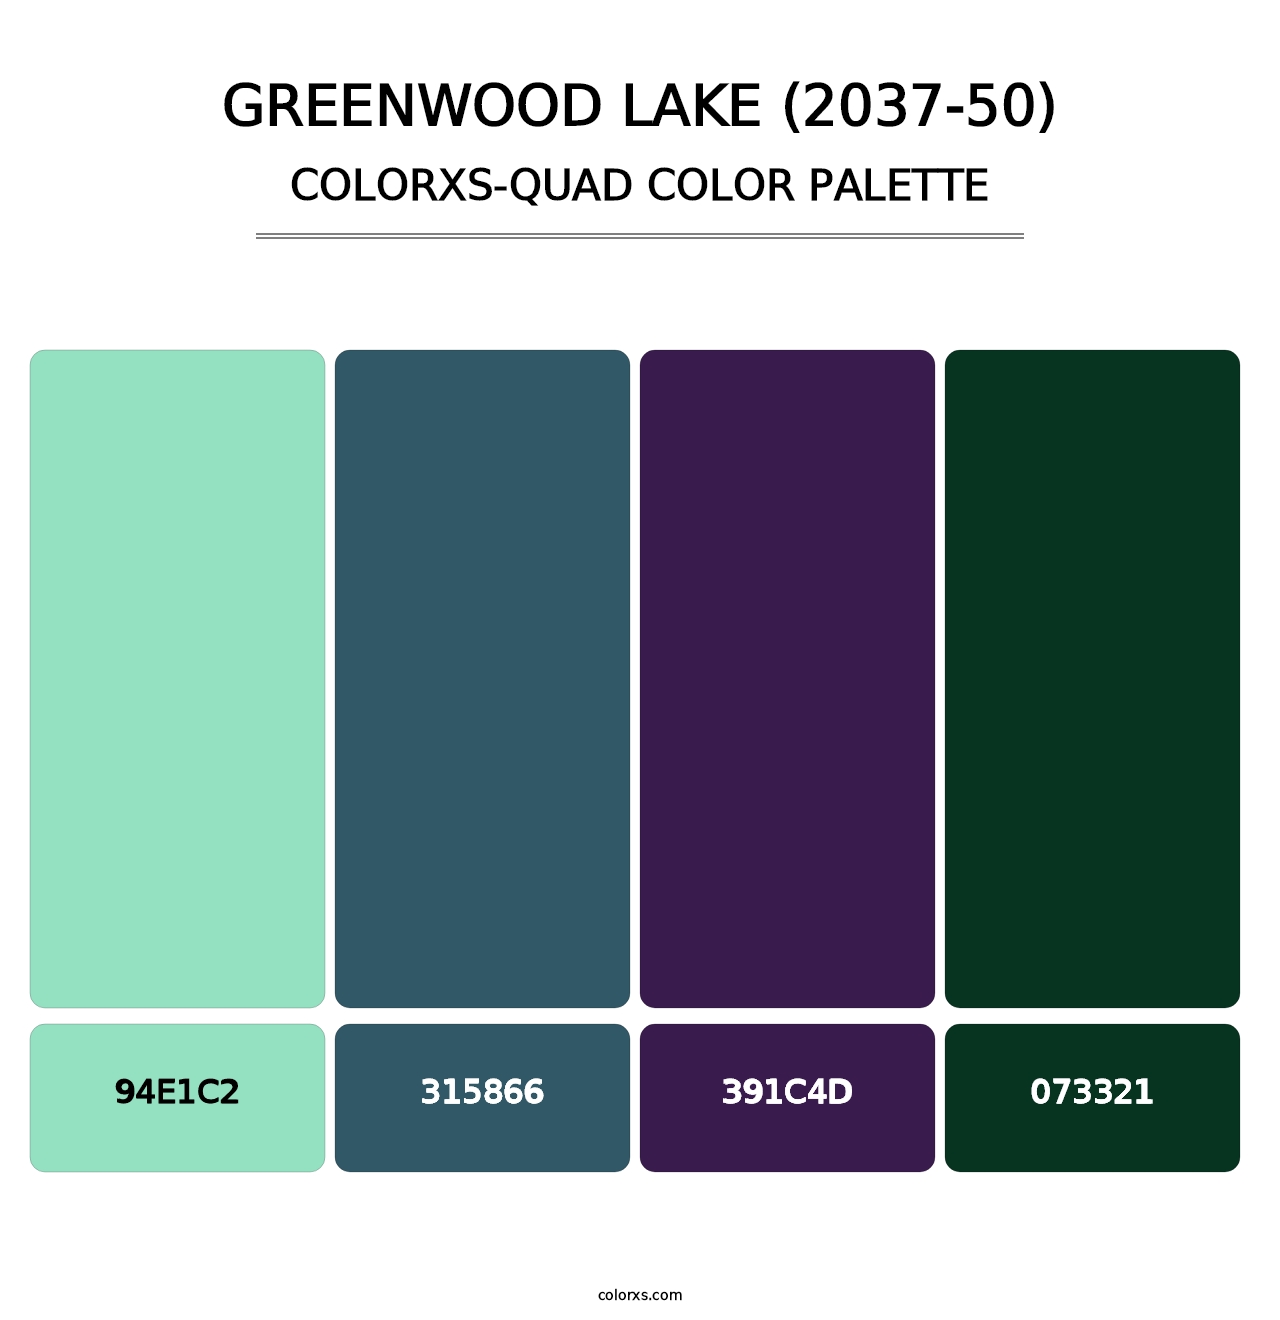 Greenwood Lake (2037-50) - Colorxs Quad Palette